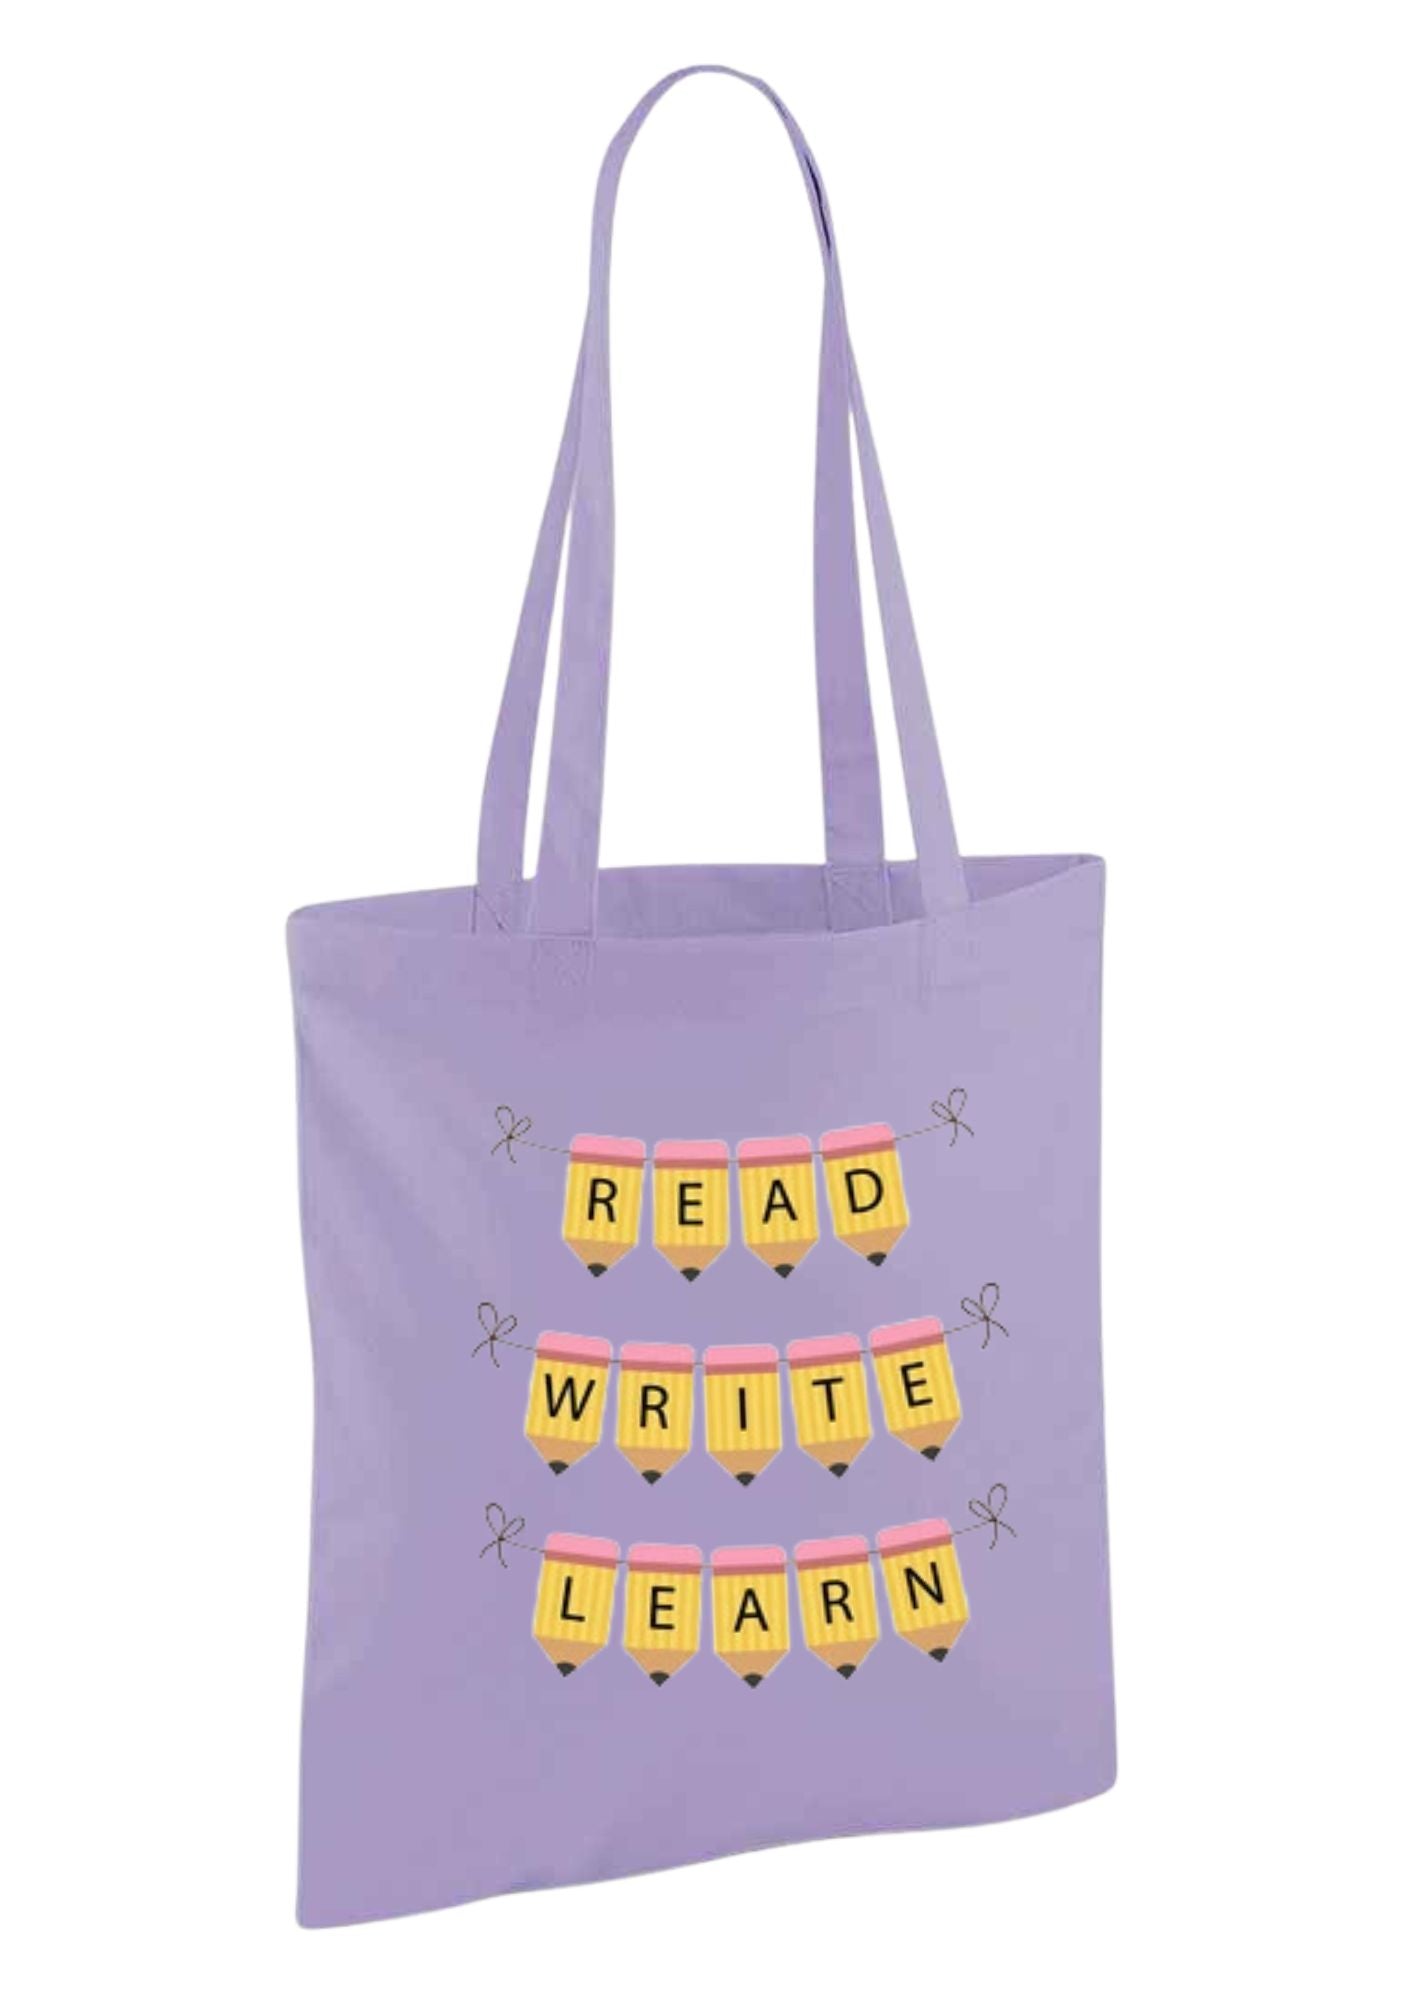 Read, write, learn tote bag